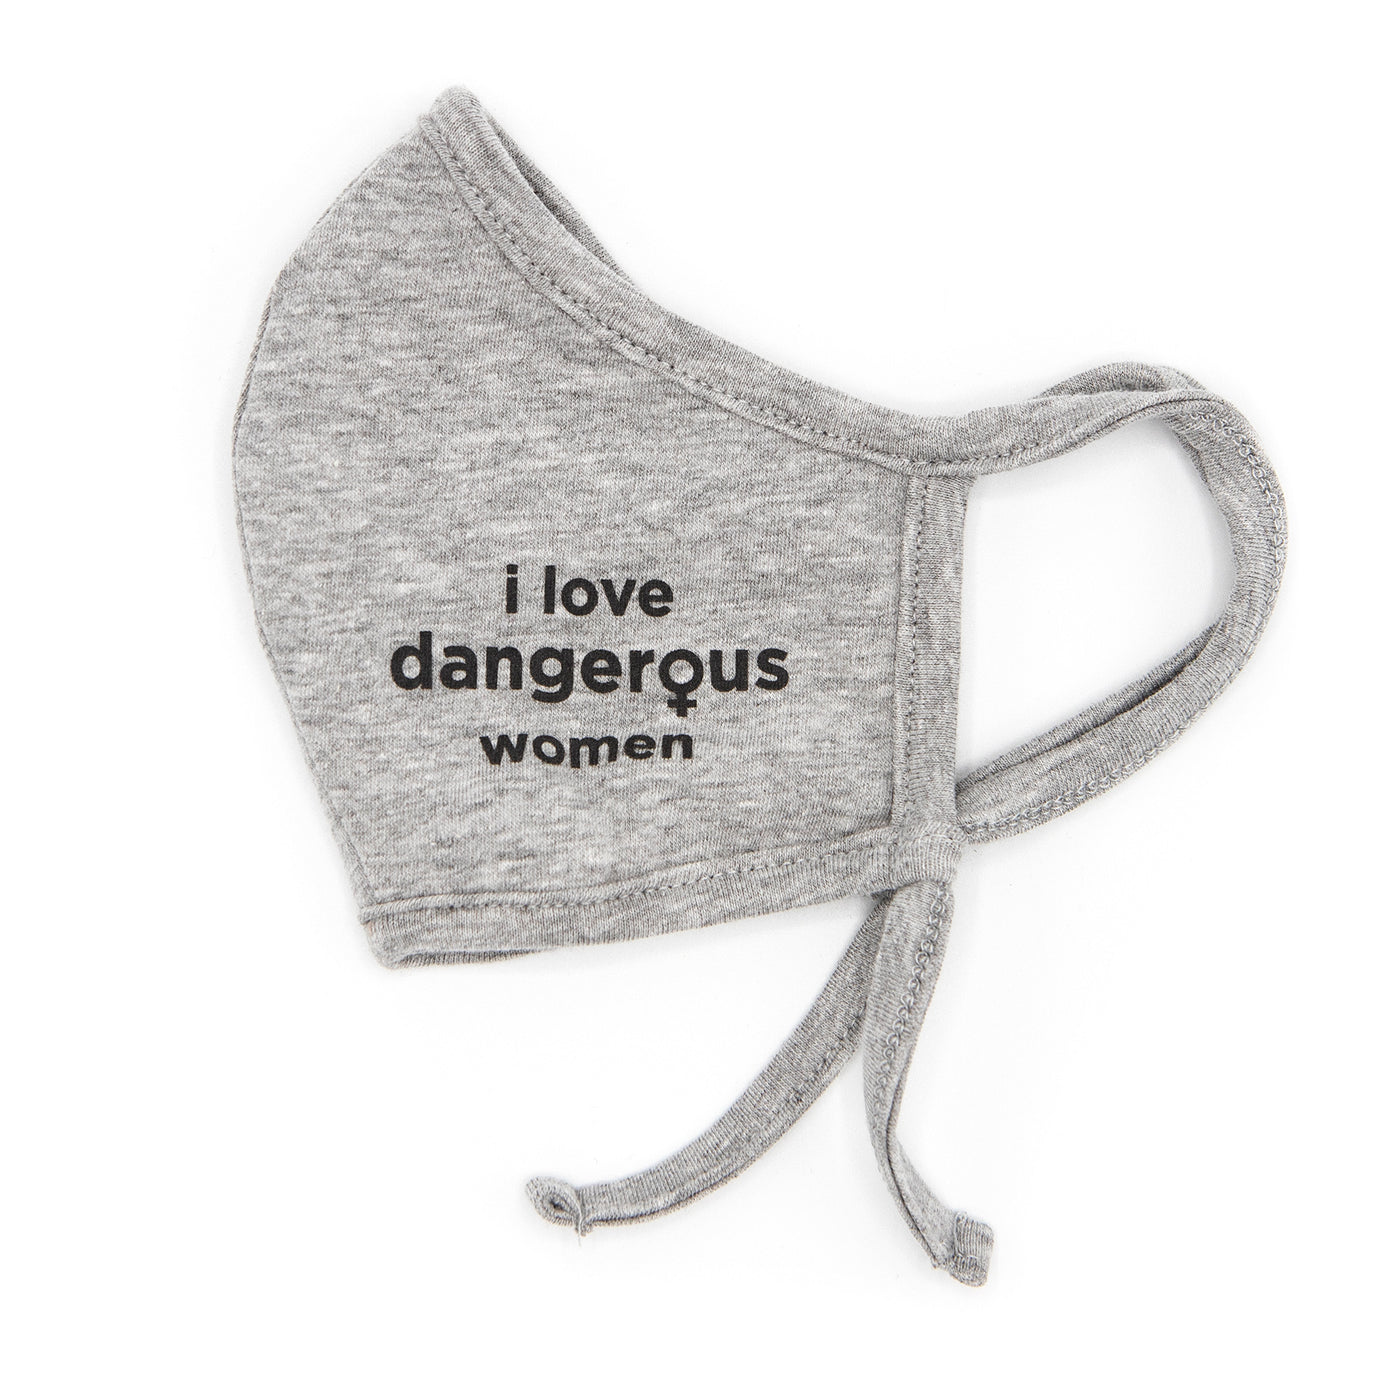 "I Love Dangerous Women" Adult Face Mask with Adjustable Straps and Filter Pocket